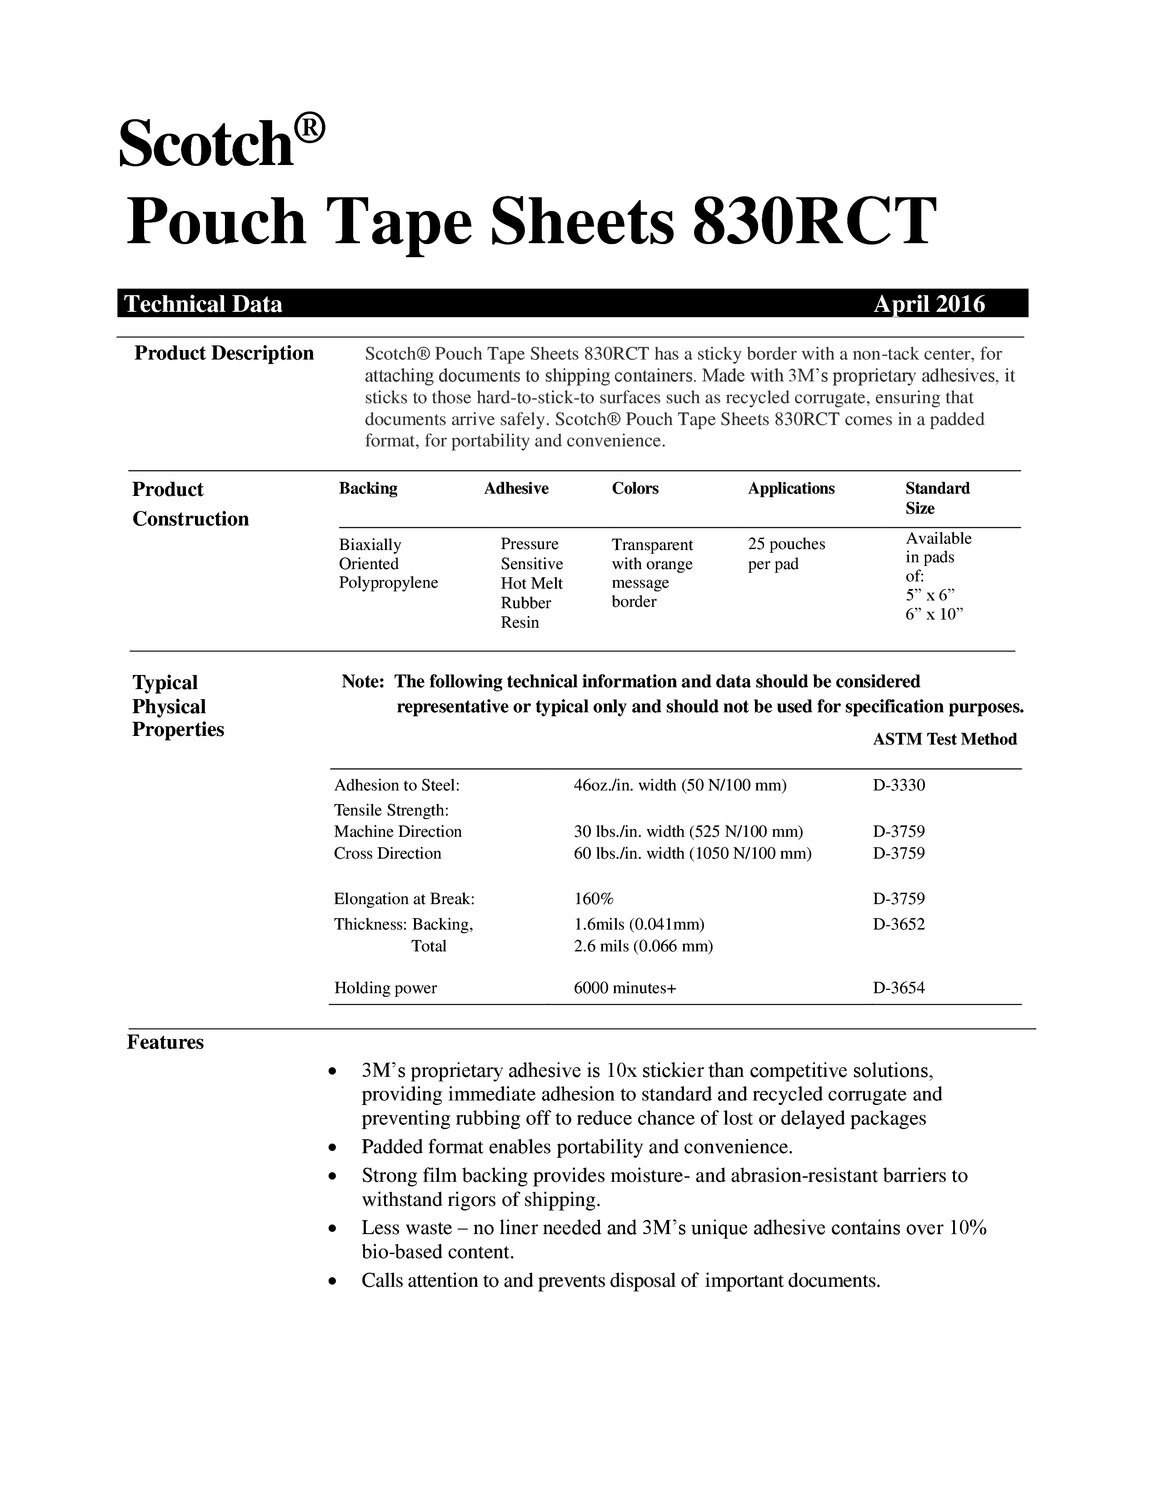 Saint-Gobain SG35-05R High Temperature PTFE Fiberglass Fabric Tape